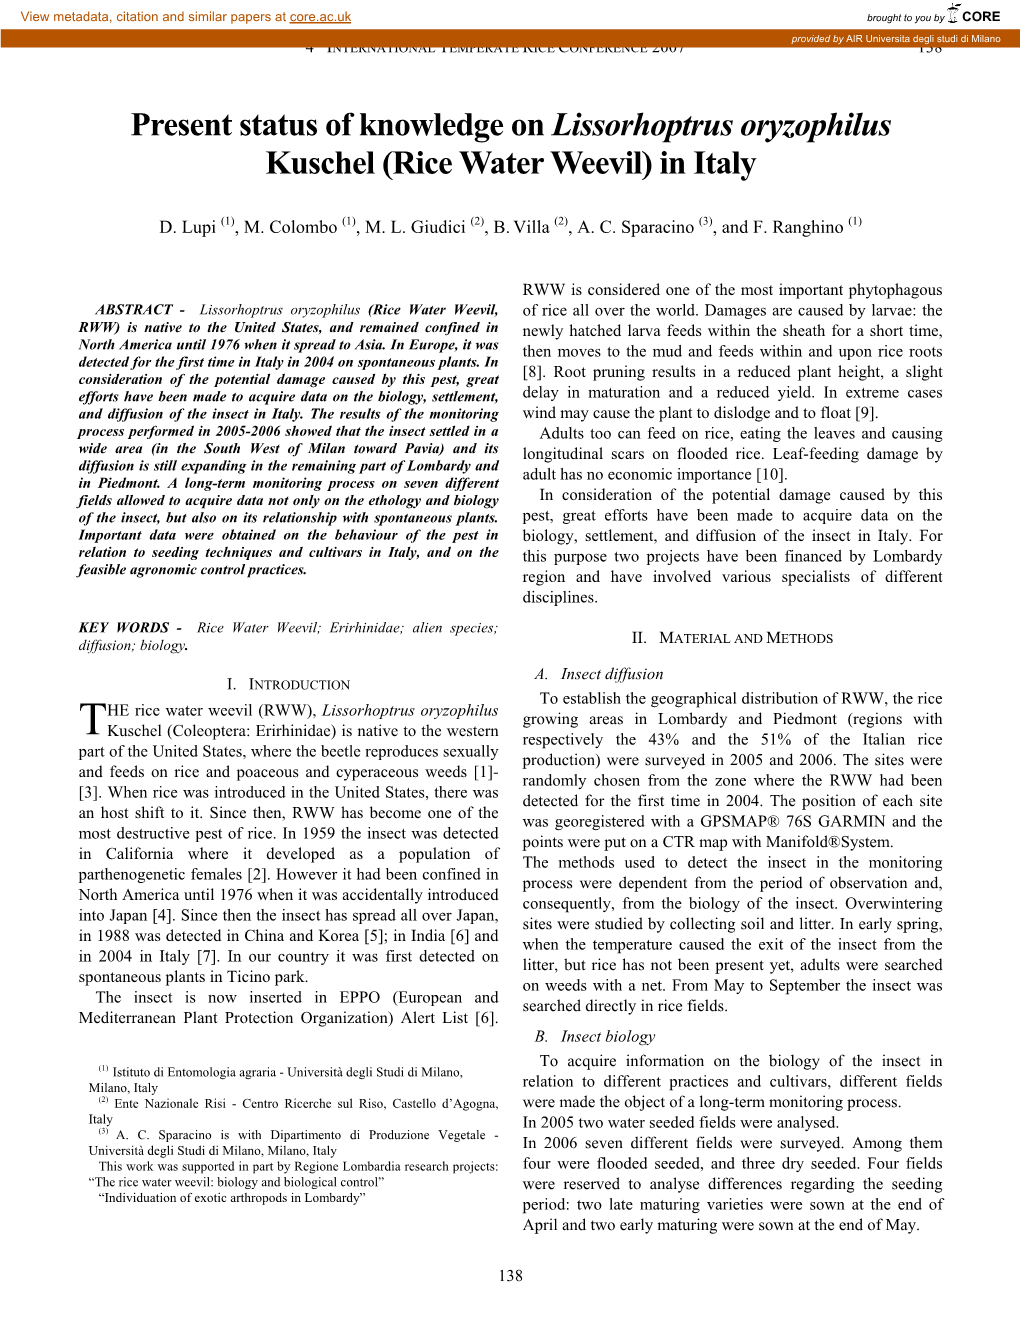 Present Status of Knowledge on Lissorhoptrus Oryzophilus Kuschel (Rice Water Weevil) in Italy